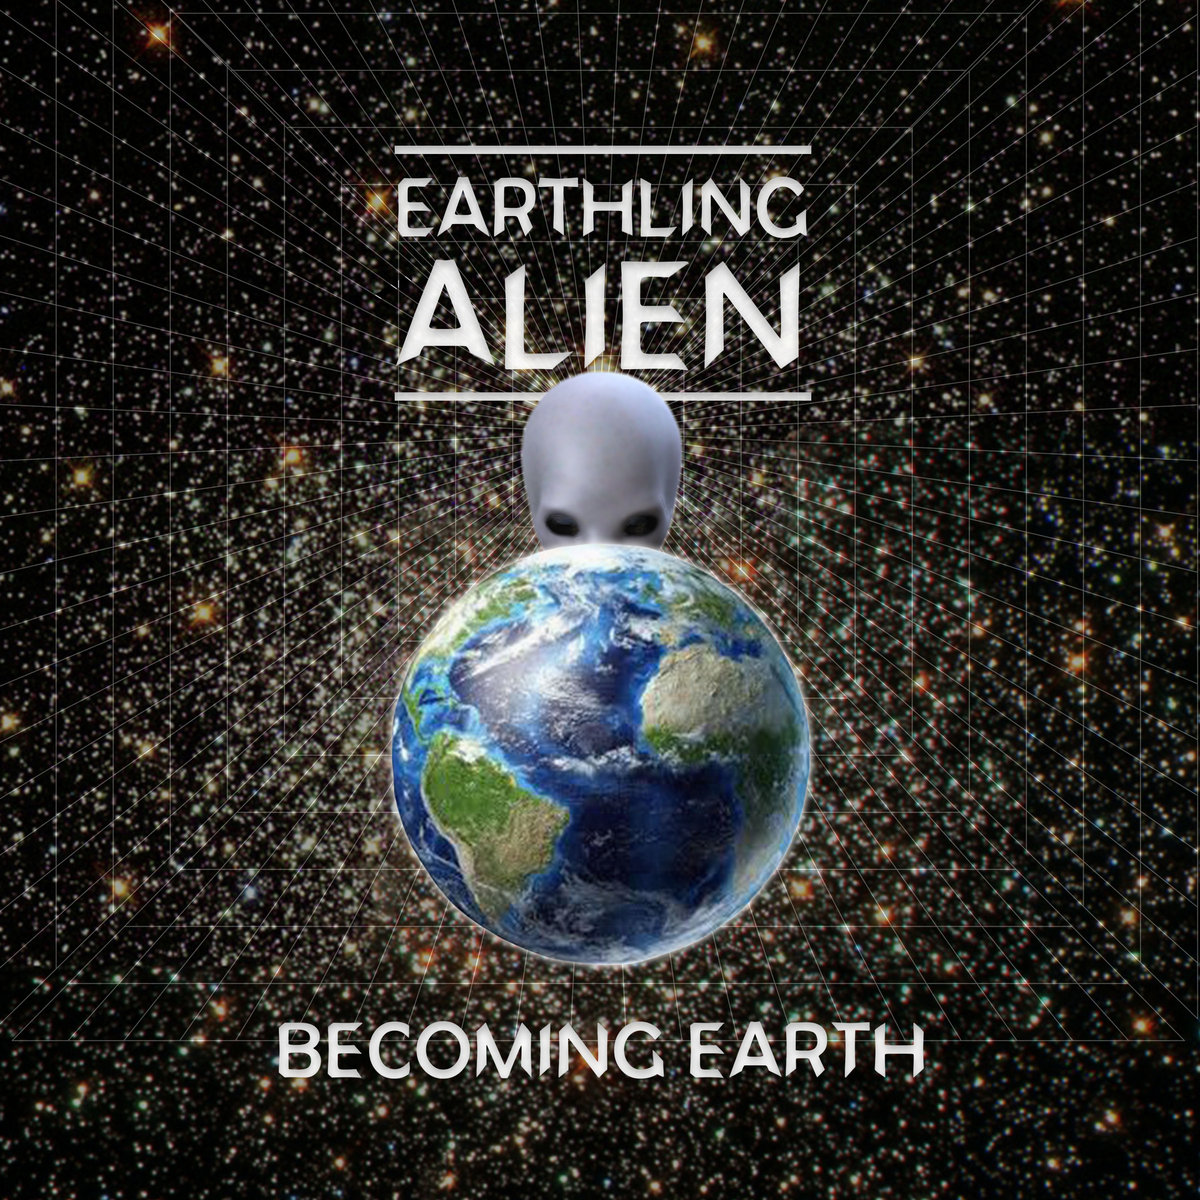 * Earthling Alien - Becoming Earth